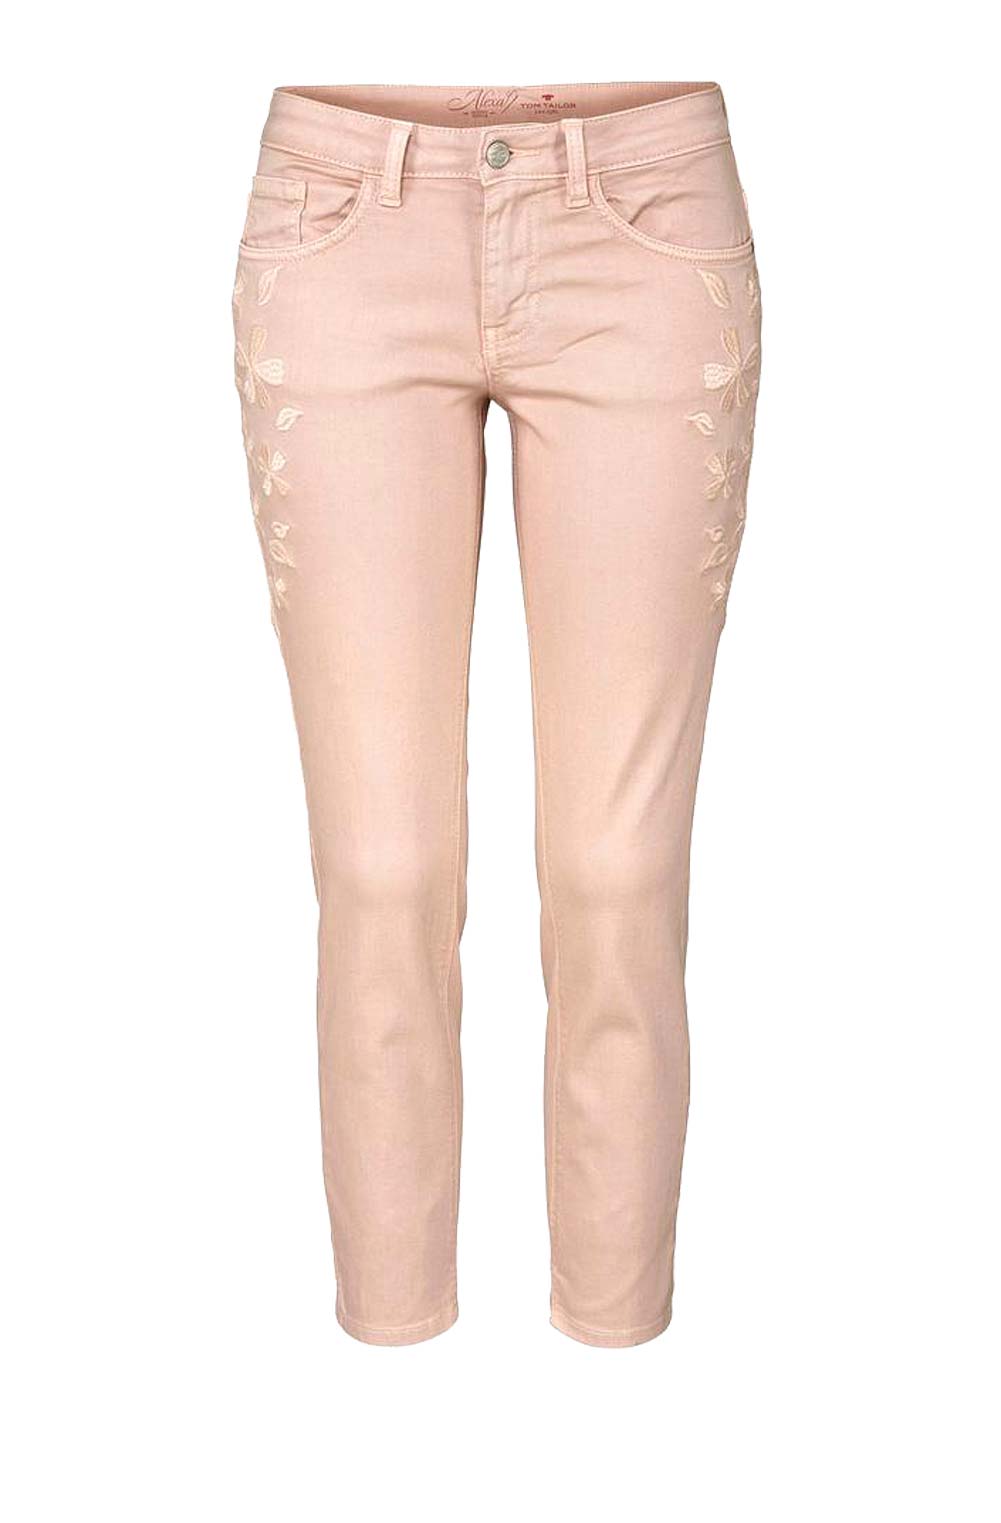 TOM TAILOR Damen Marken-Skinny-Jeans ALEXA", rosé, 32 inch"